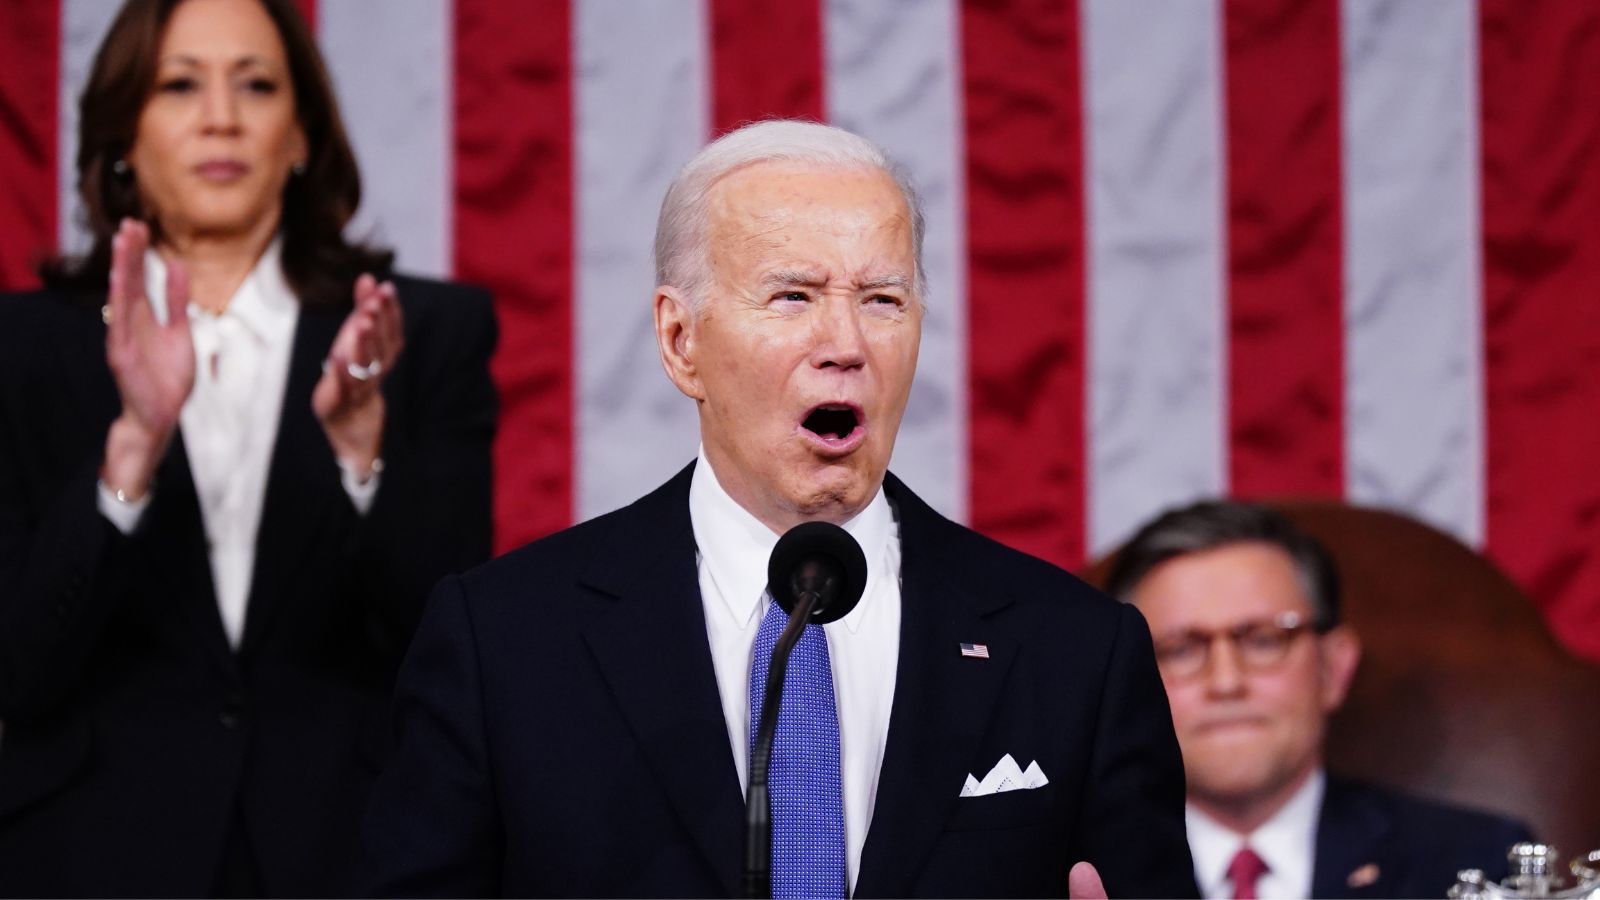 Read full transcript of President Joe Biden's State of the Union speech